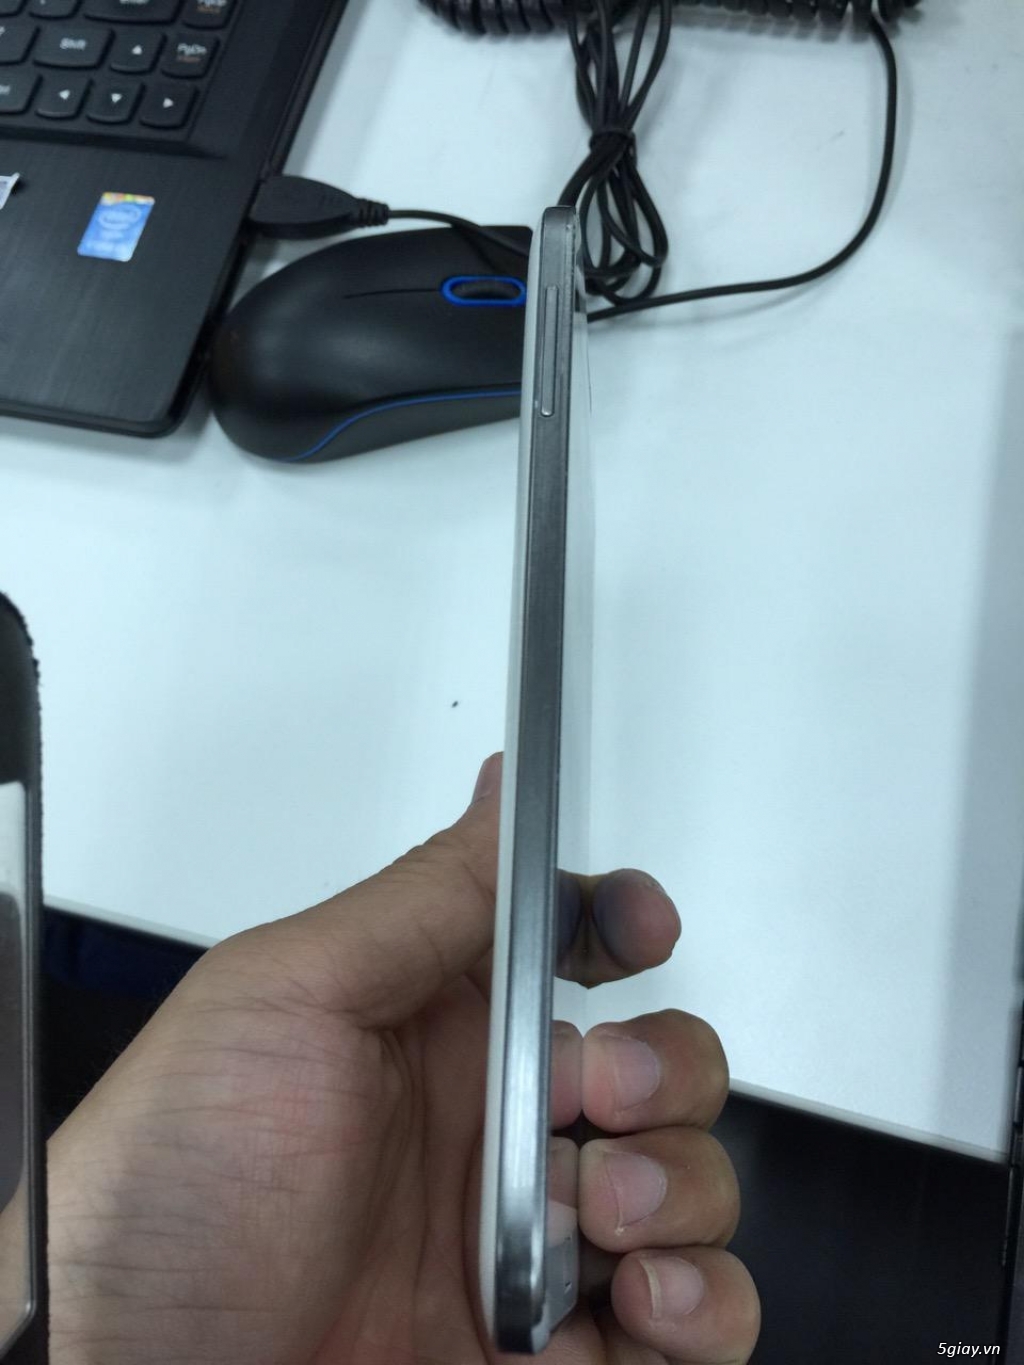 Samsung E7 98% chưa sửa chữa - 3